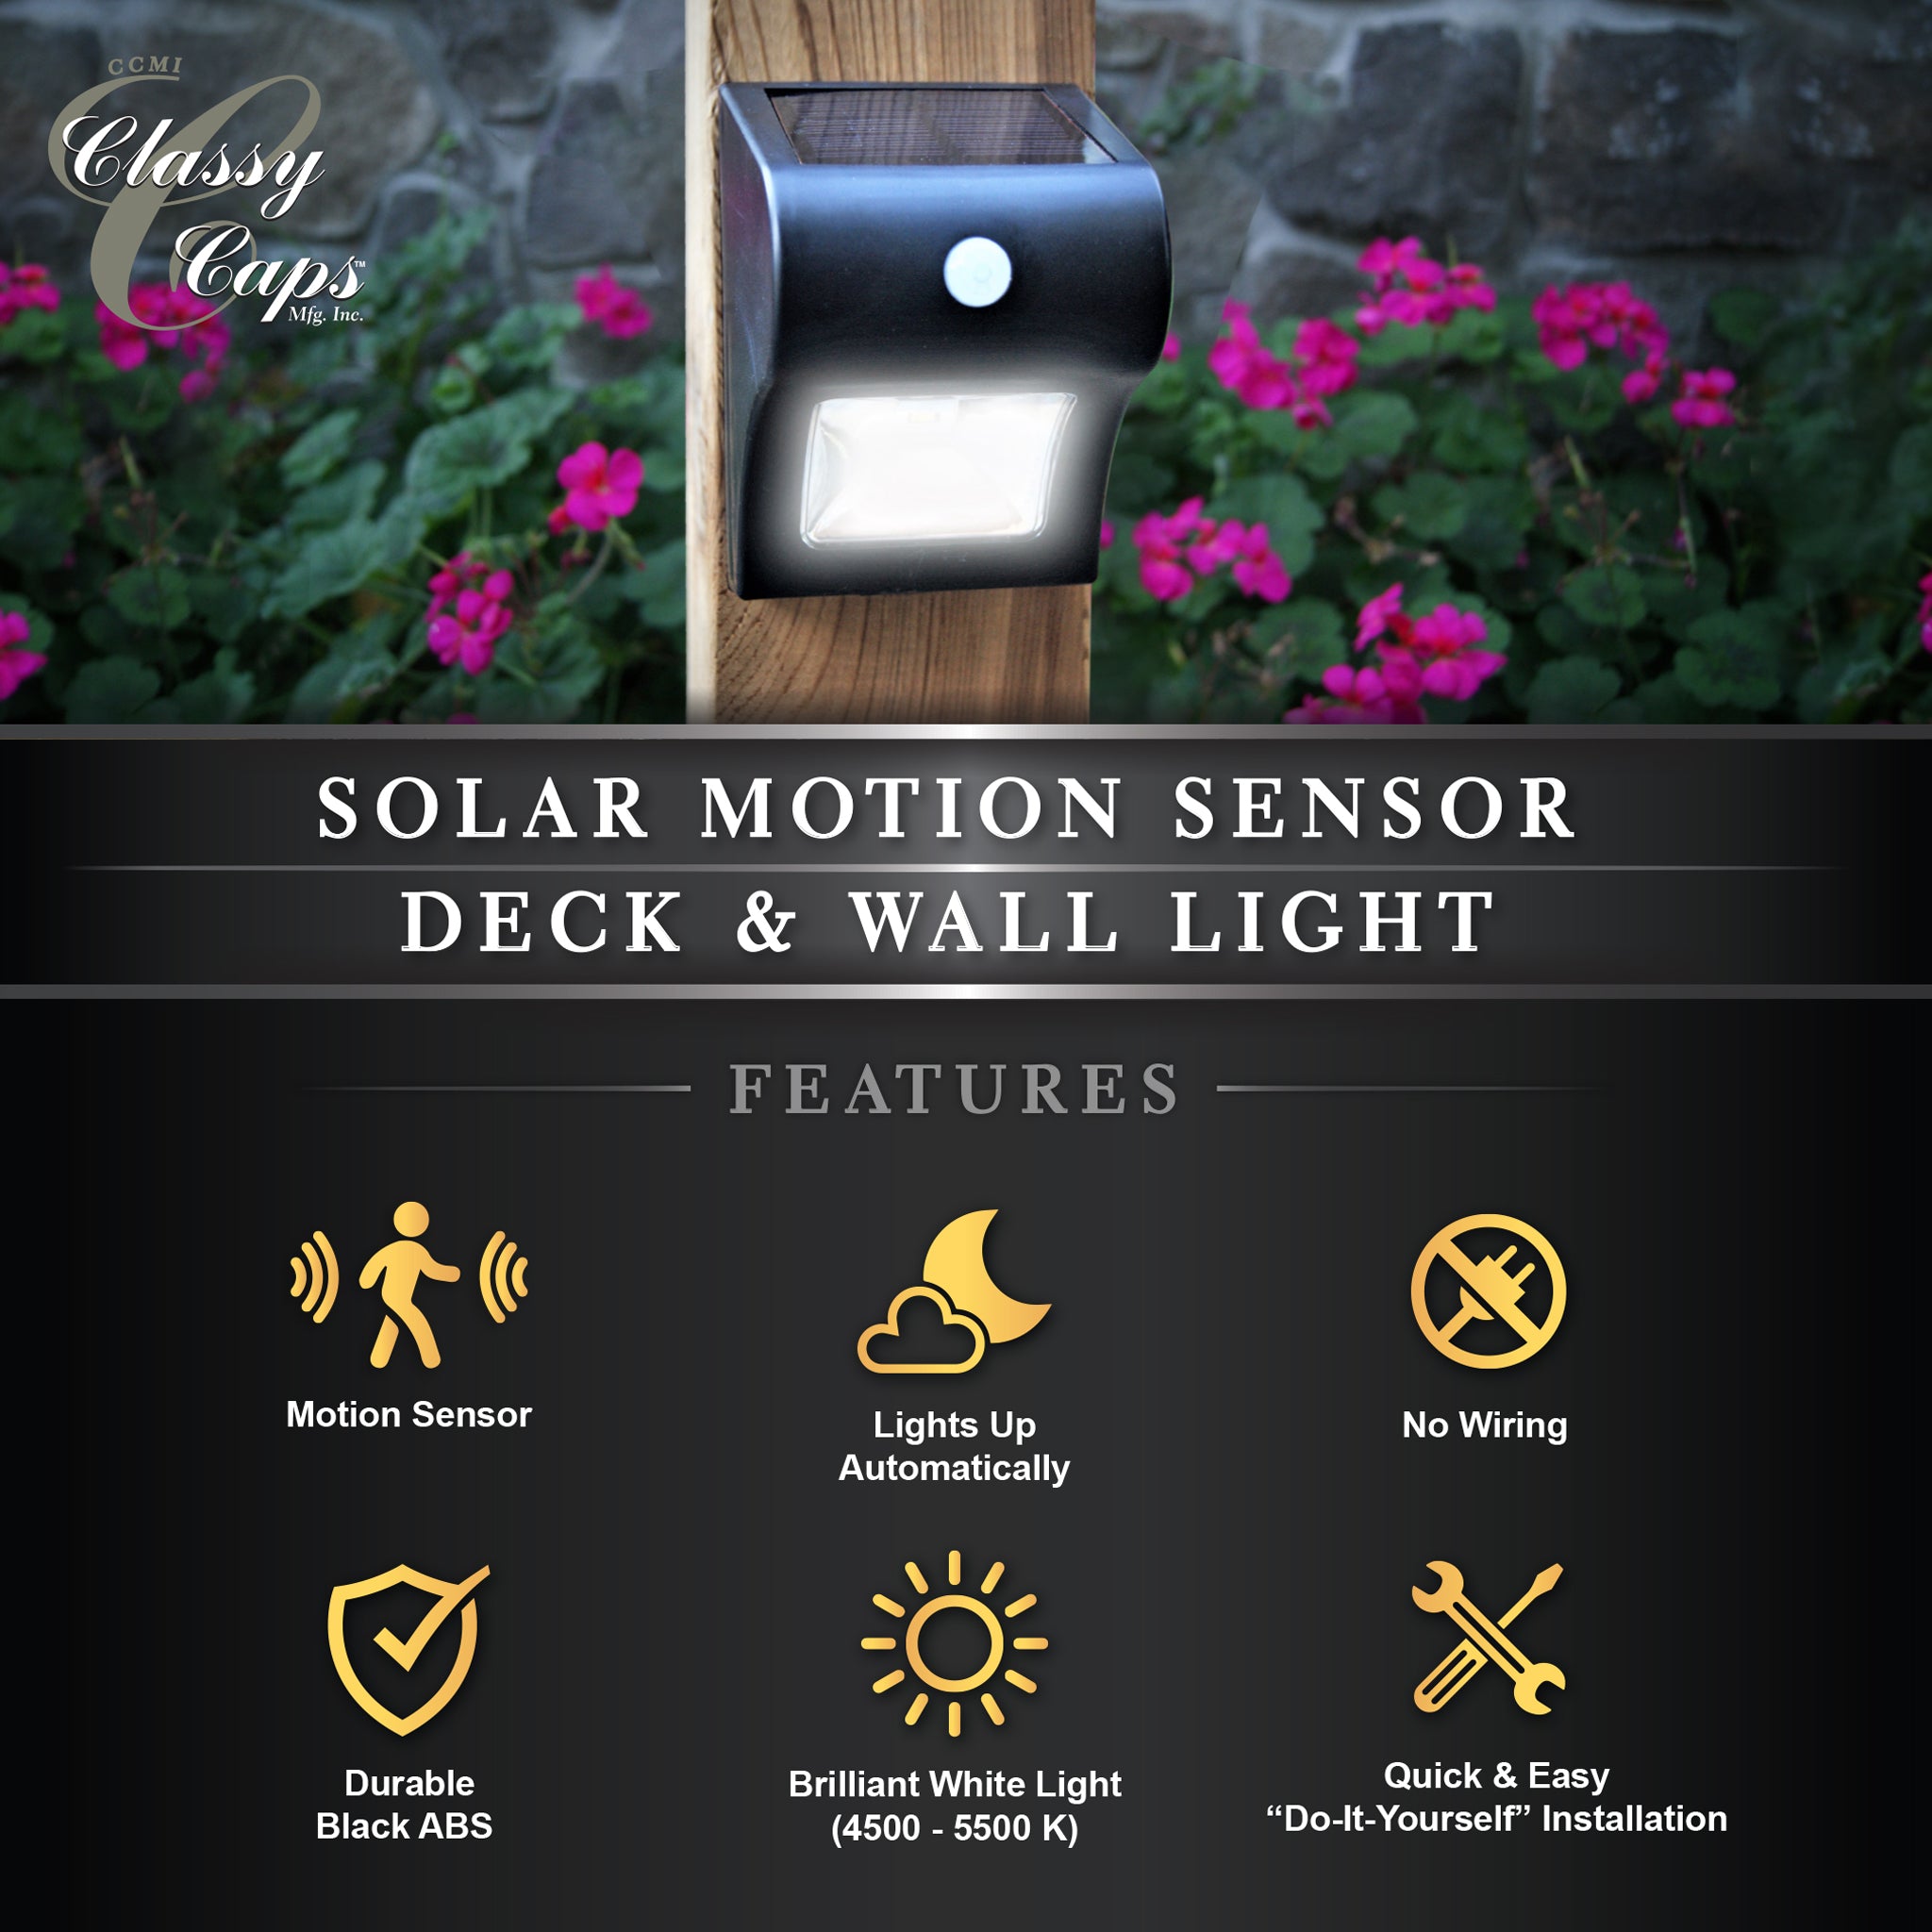 Solar Motion Sensor Deck & Wall Light